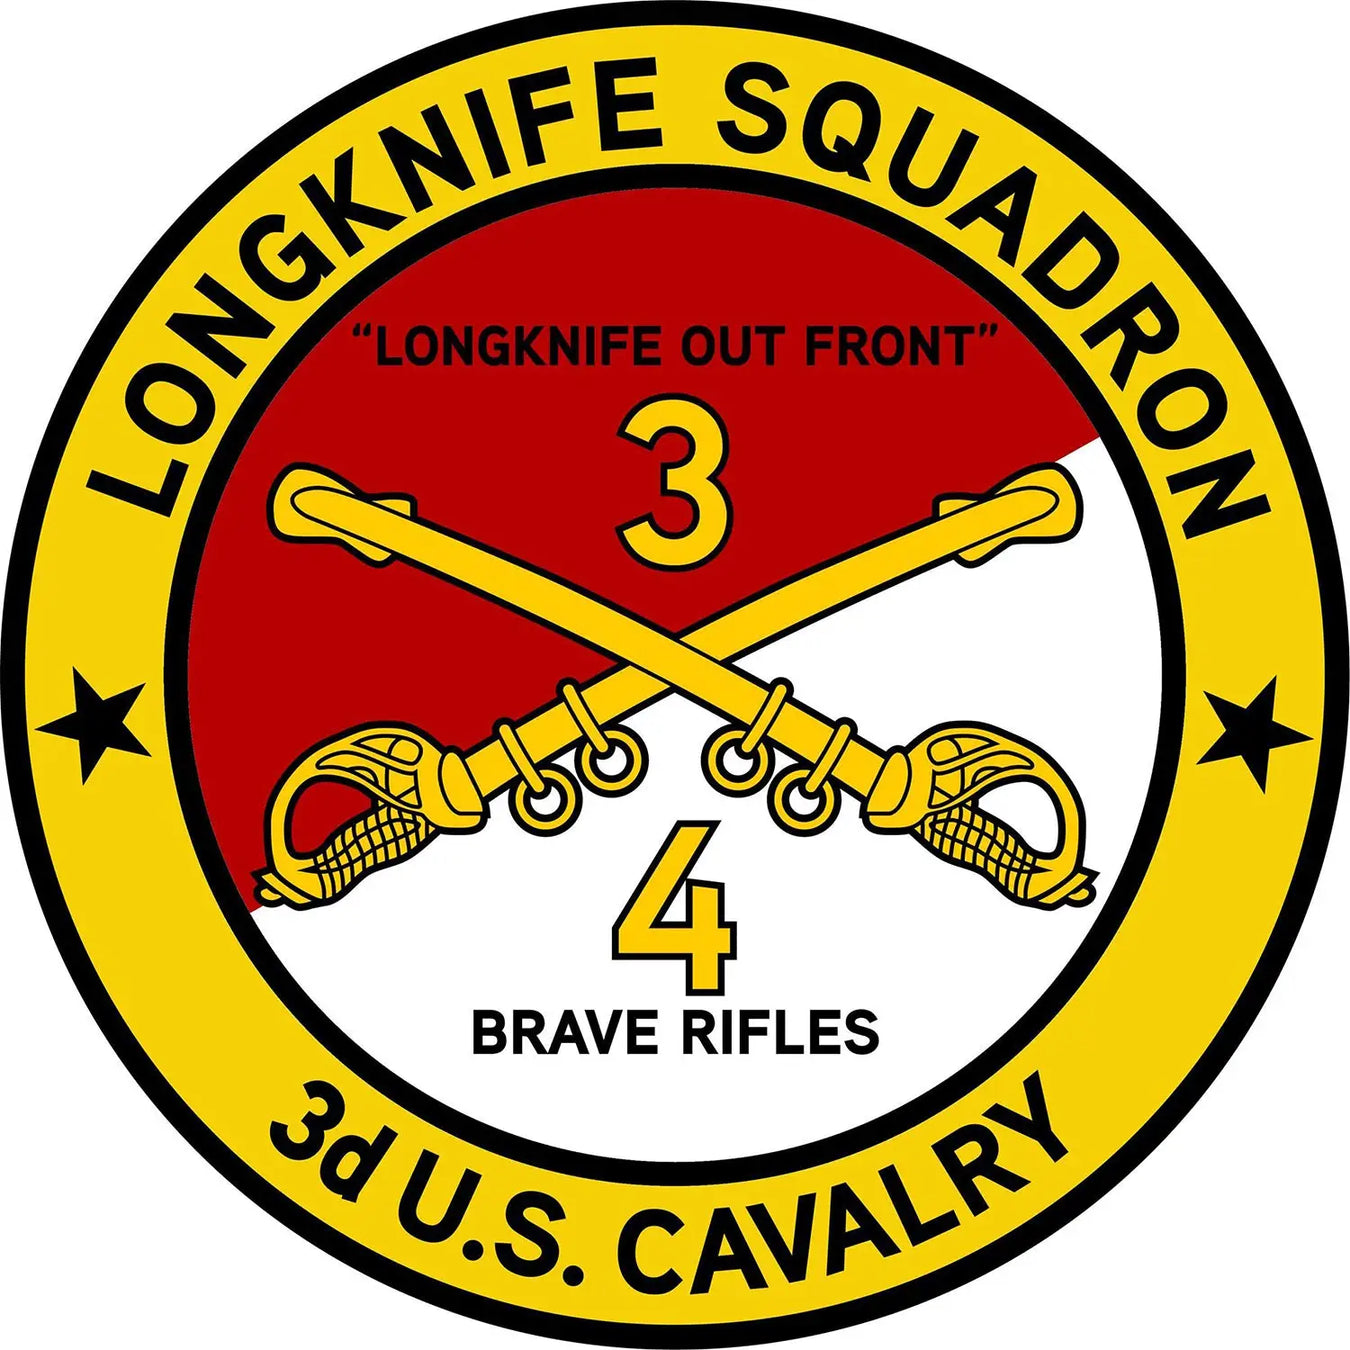 4th Squadron 3rd Cavalry Regiment (4-3 CAV) "Longknife"